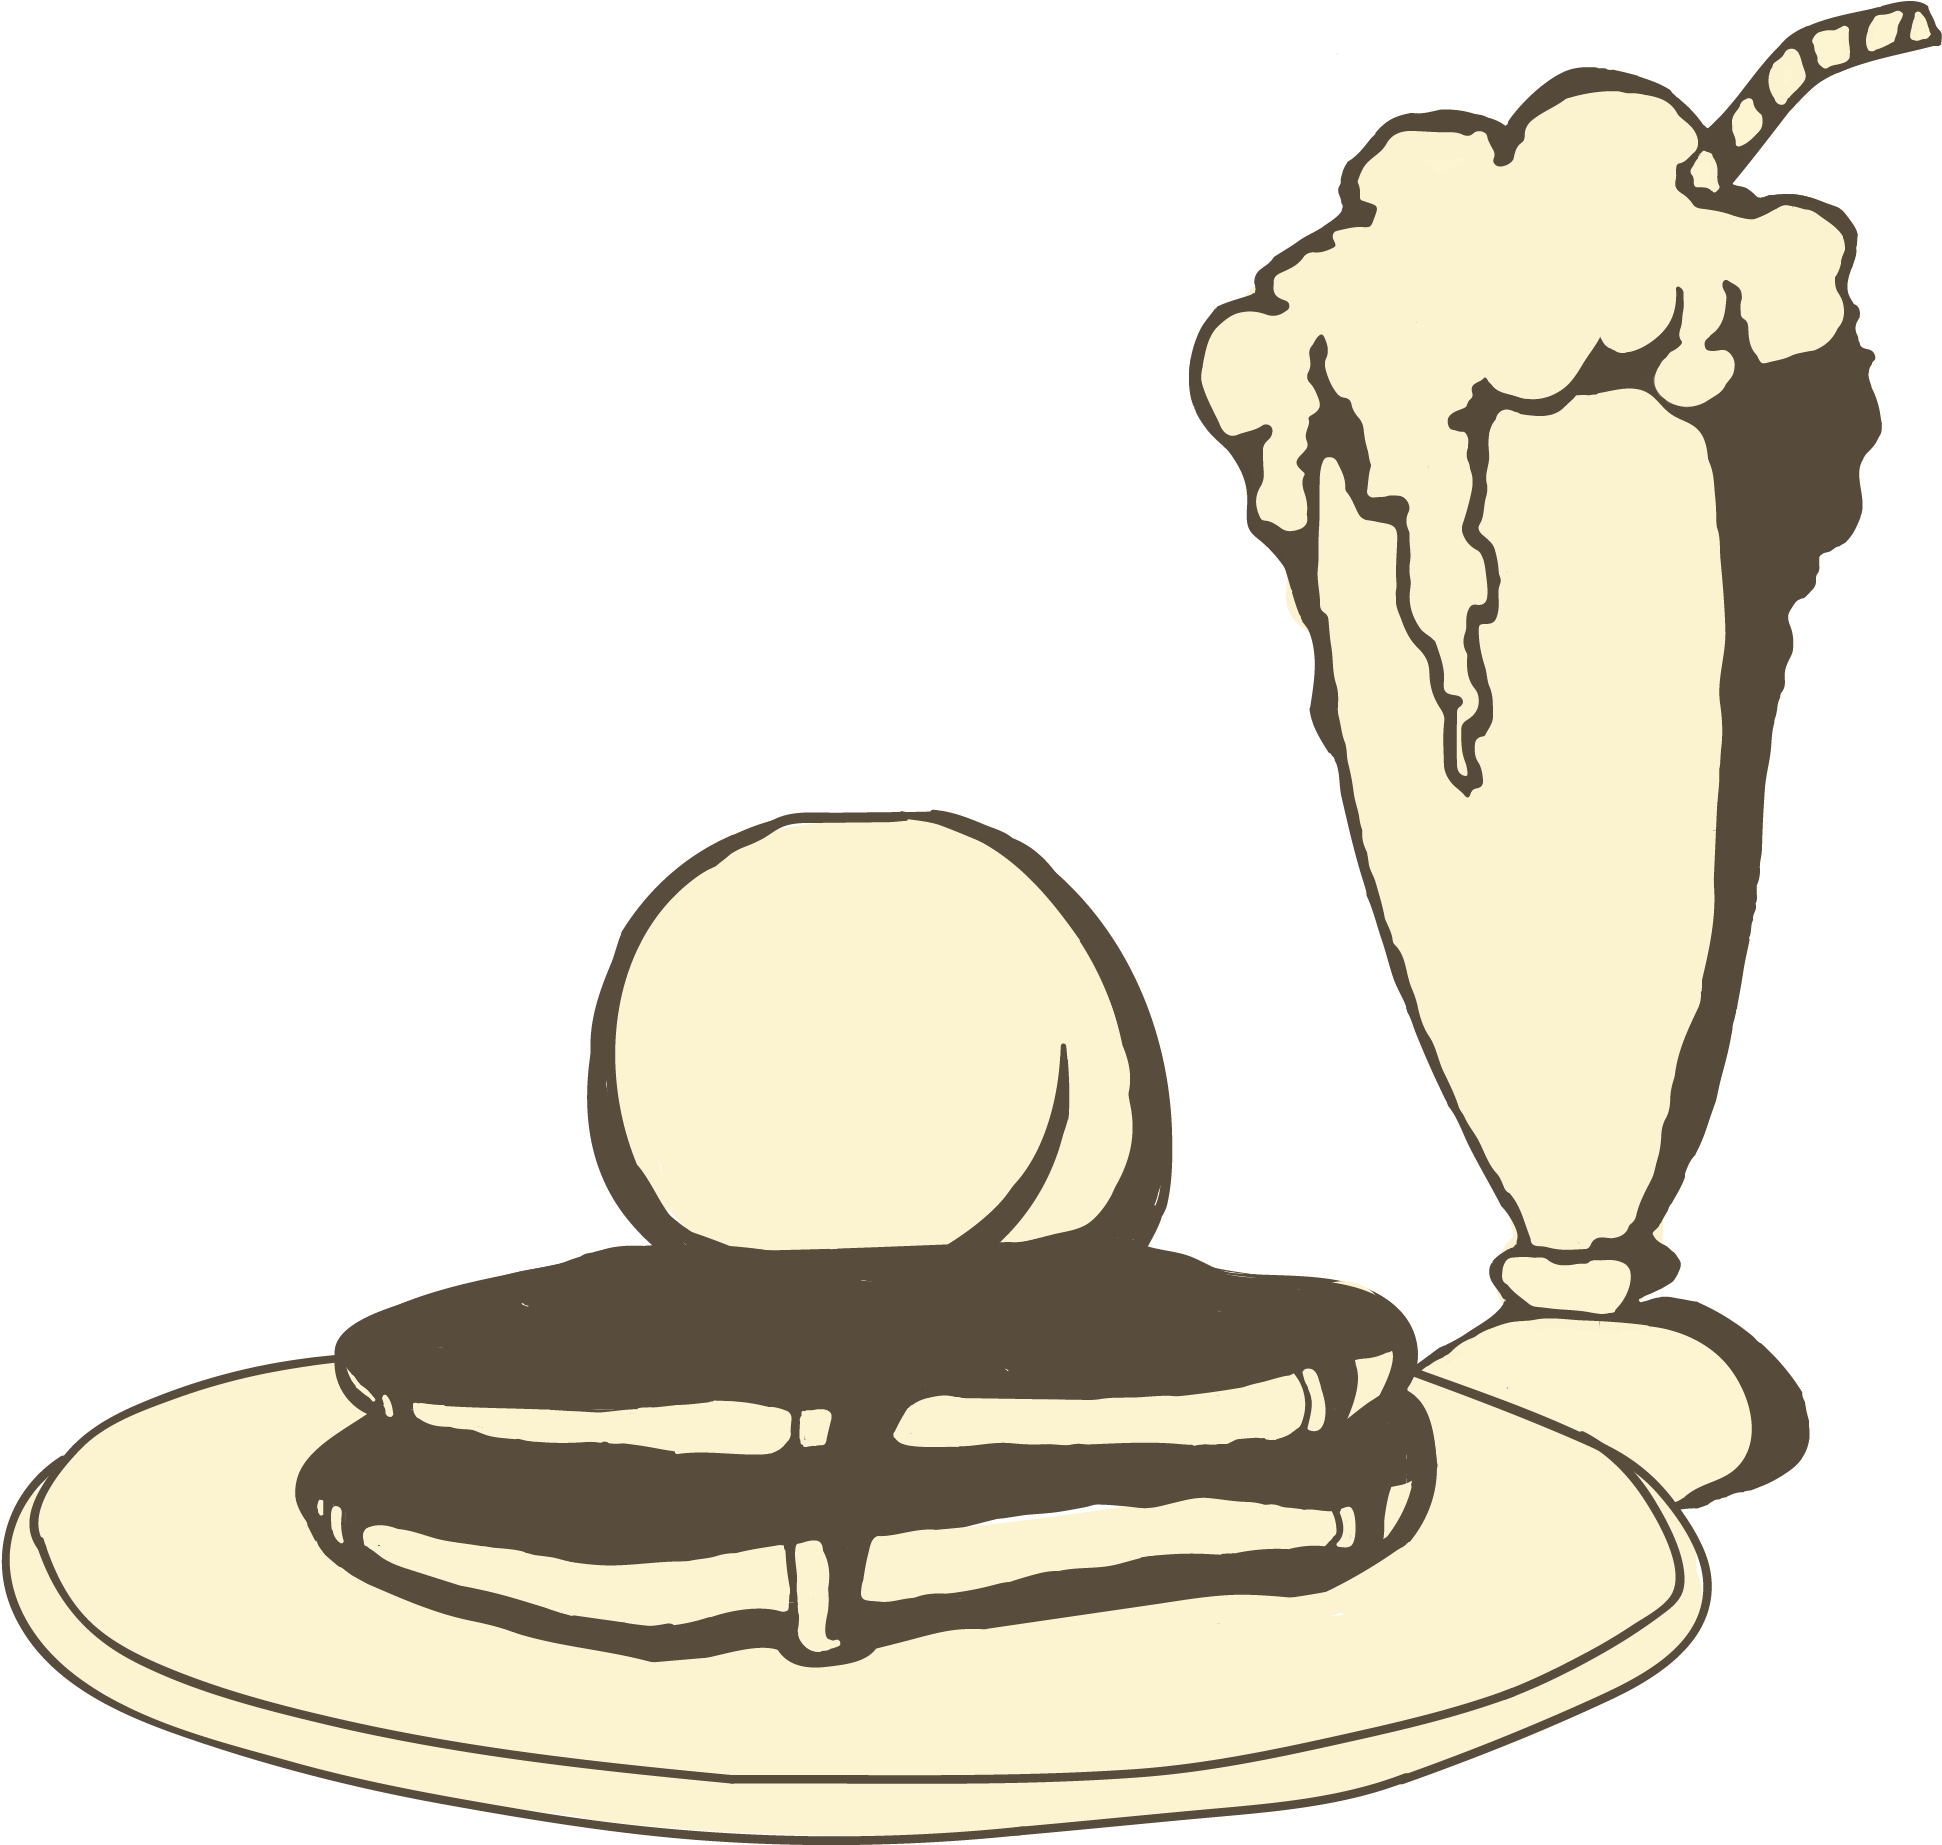 Stackof Pancakesand Syrup Jug Illustration PNG image